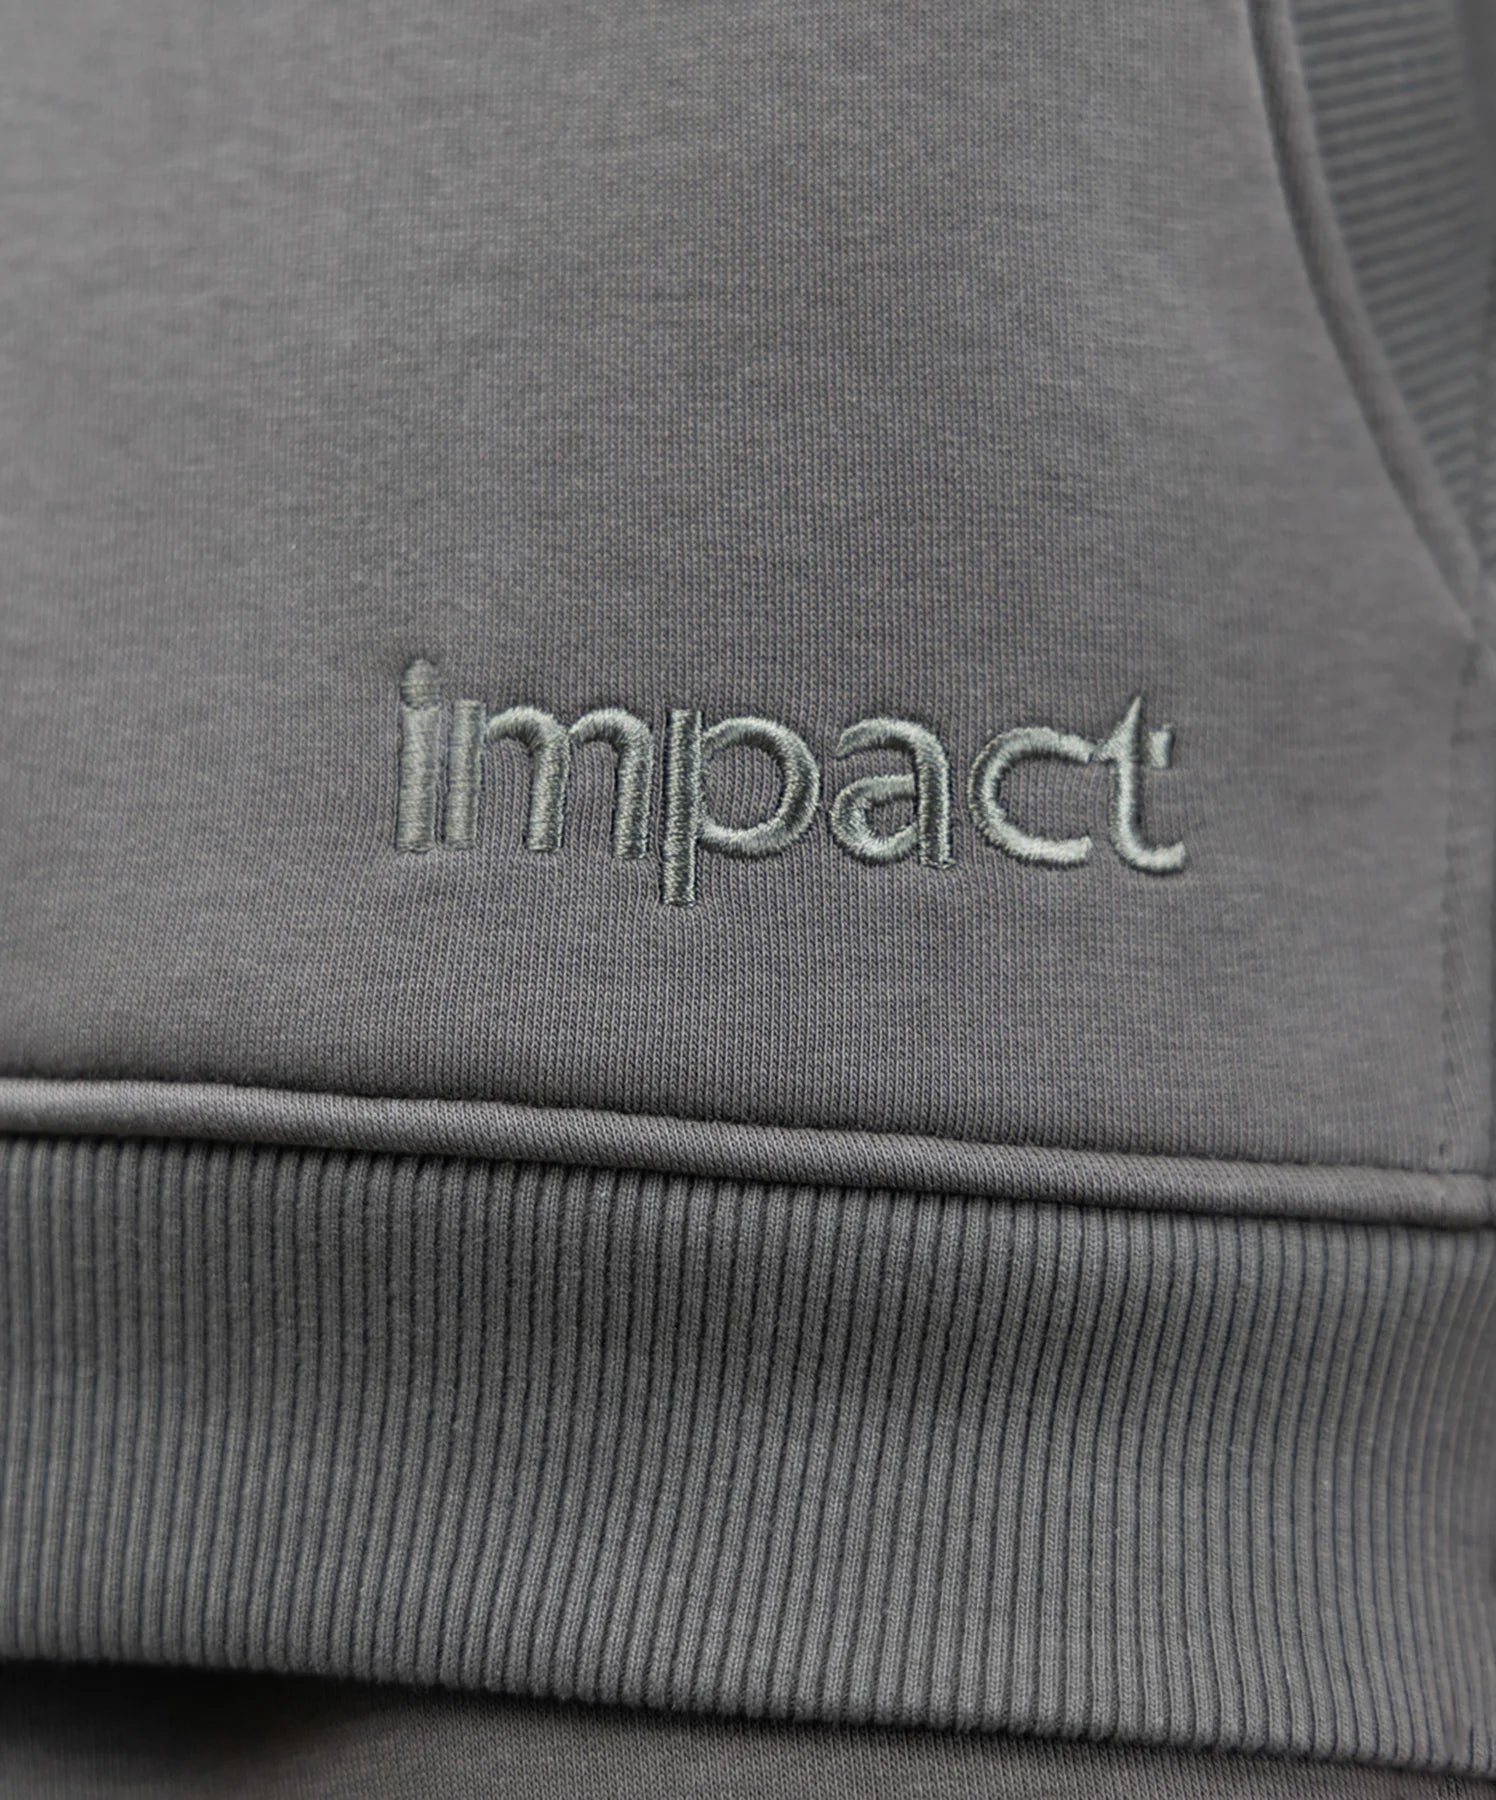 Impact Logo on the Hoodie